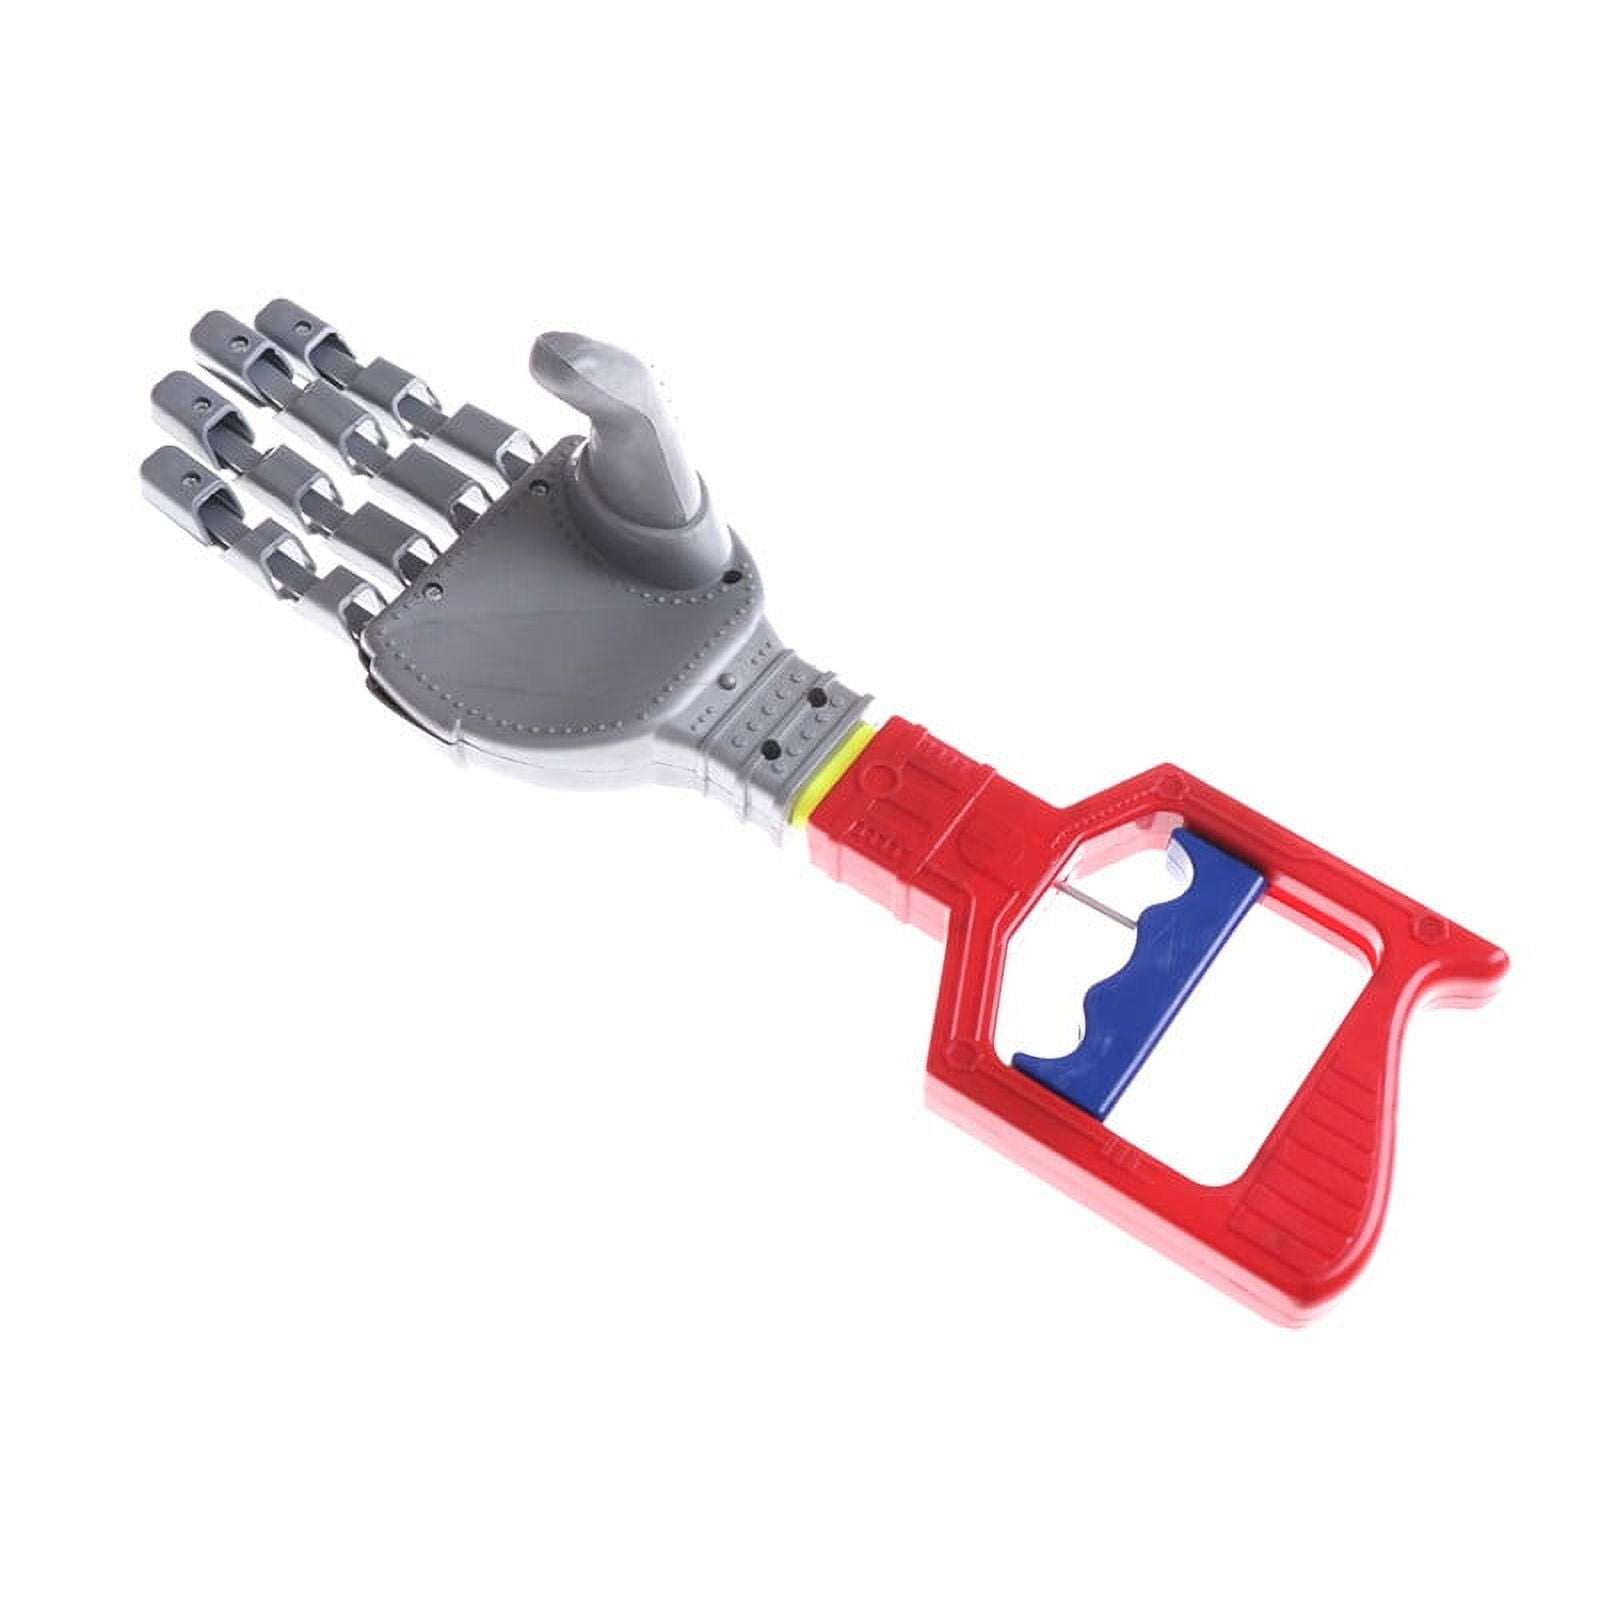 Interactive Toy Grabber Robot Hand Grabber Robotic Arm Reacher Grab Claw  Fun Toy